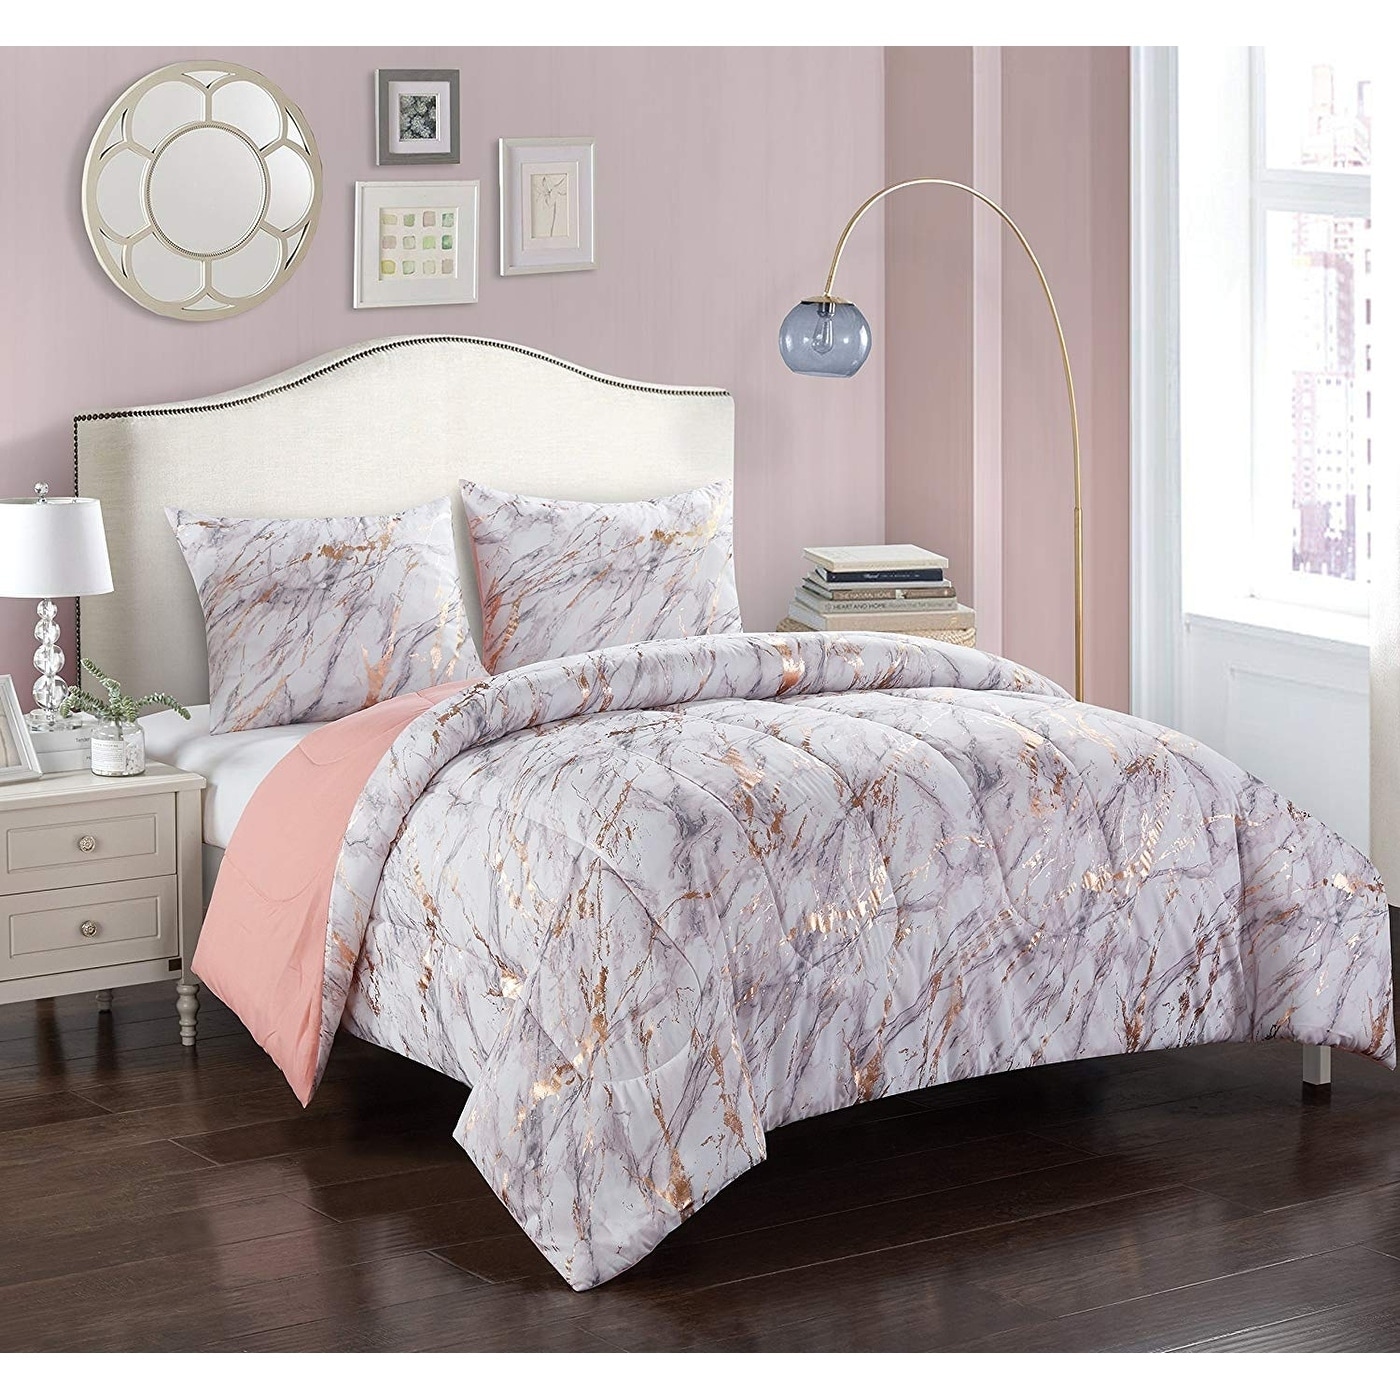 rose gold comforter - Expert Interior Design Ideas for Your Home Extra ...